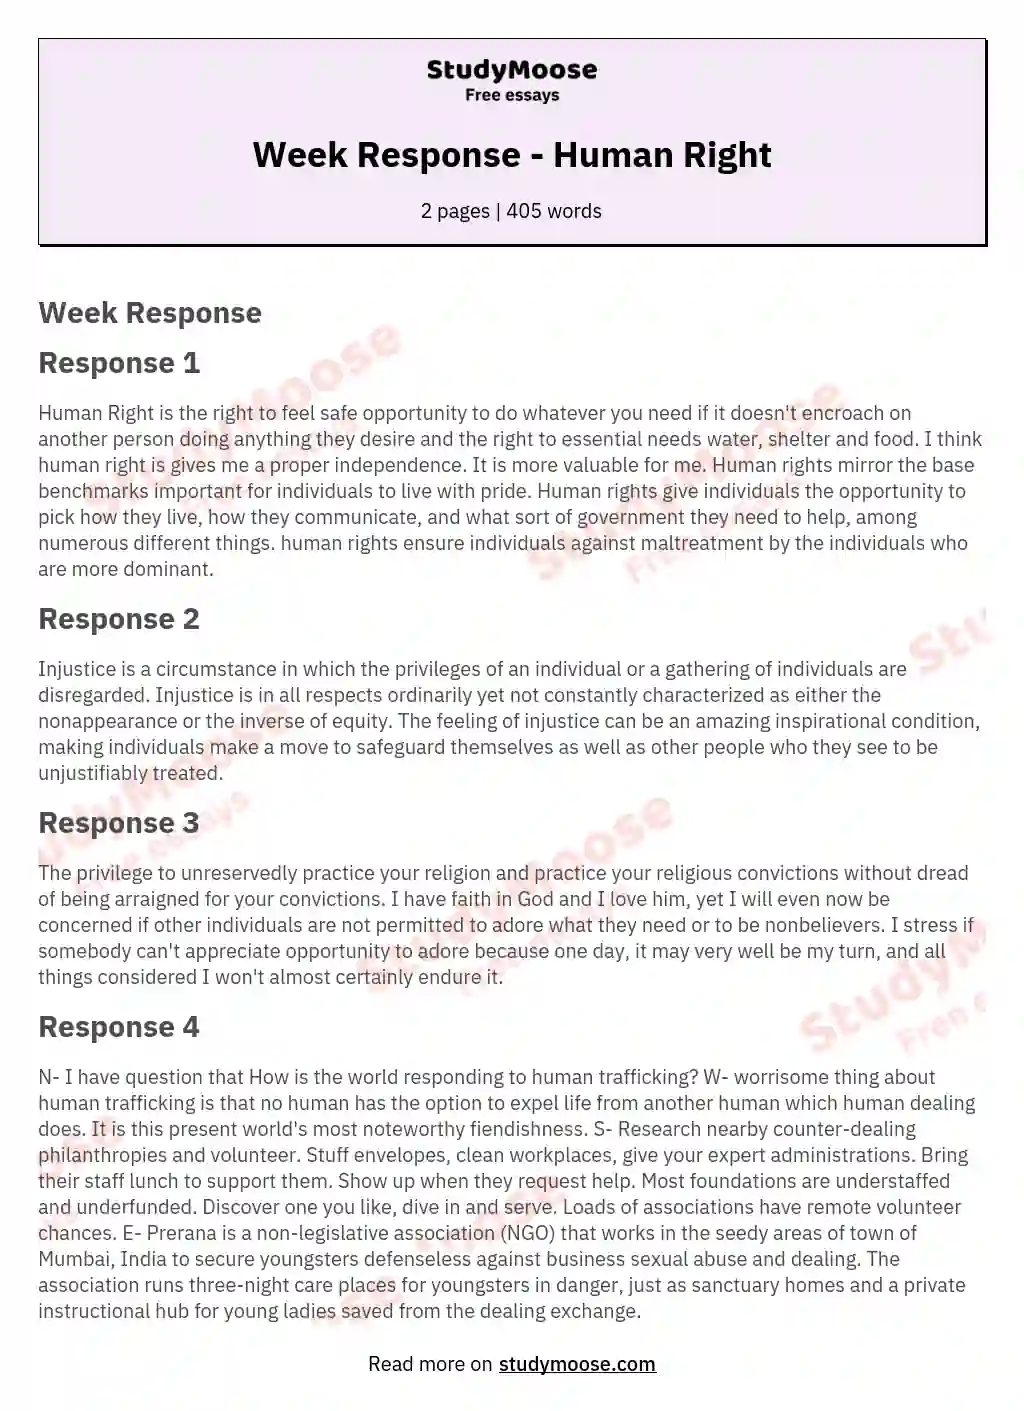 Week Response - Human Right essay